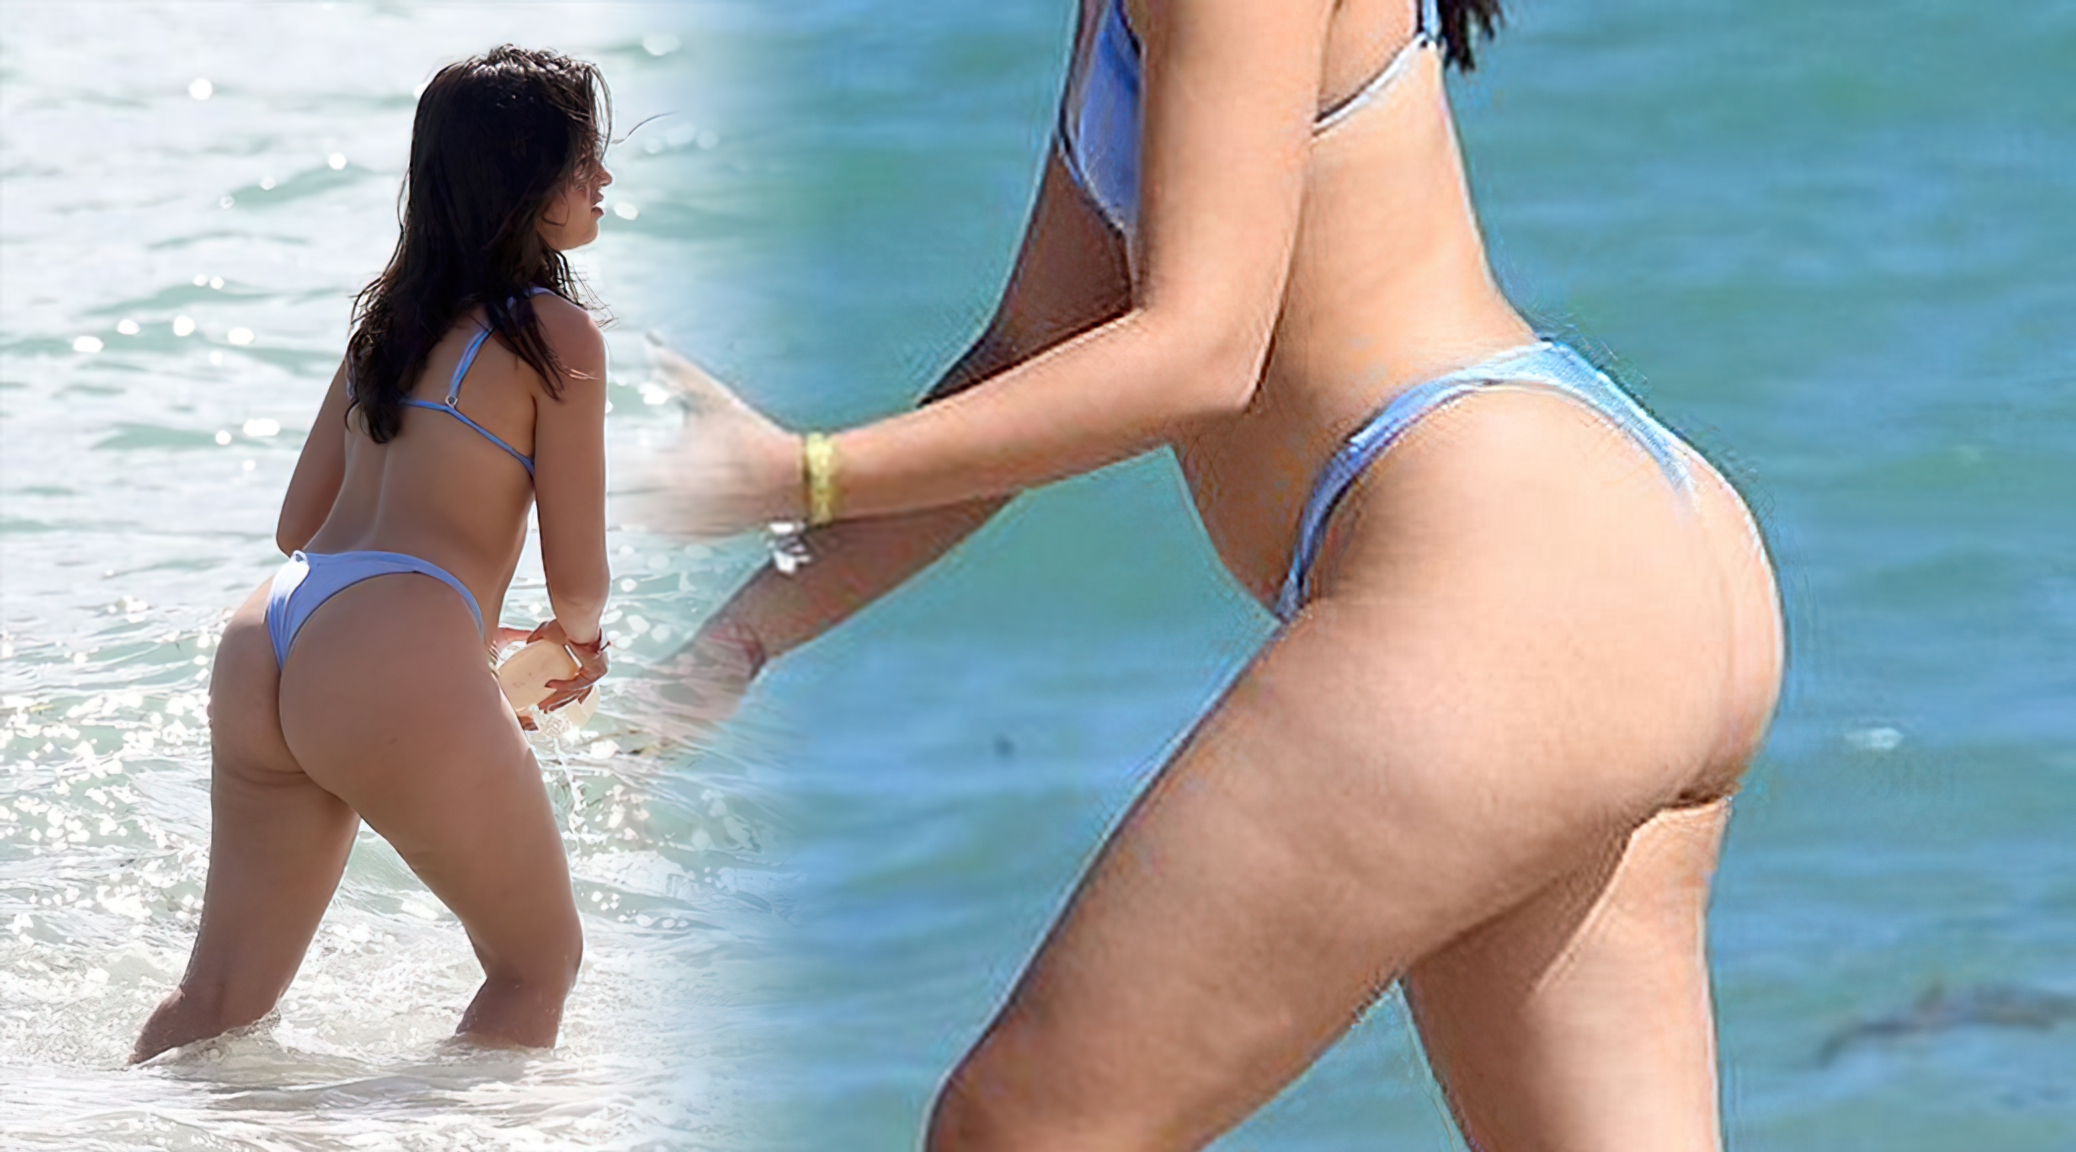 Singer Camila Cabello wearing a light blue bikini and boyfriend Shawn Mende...